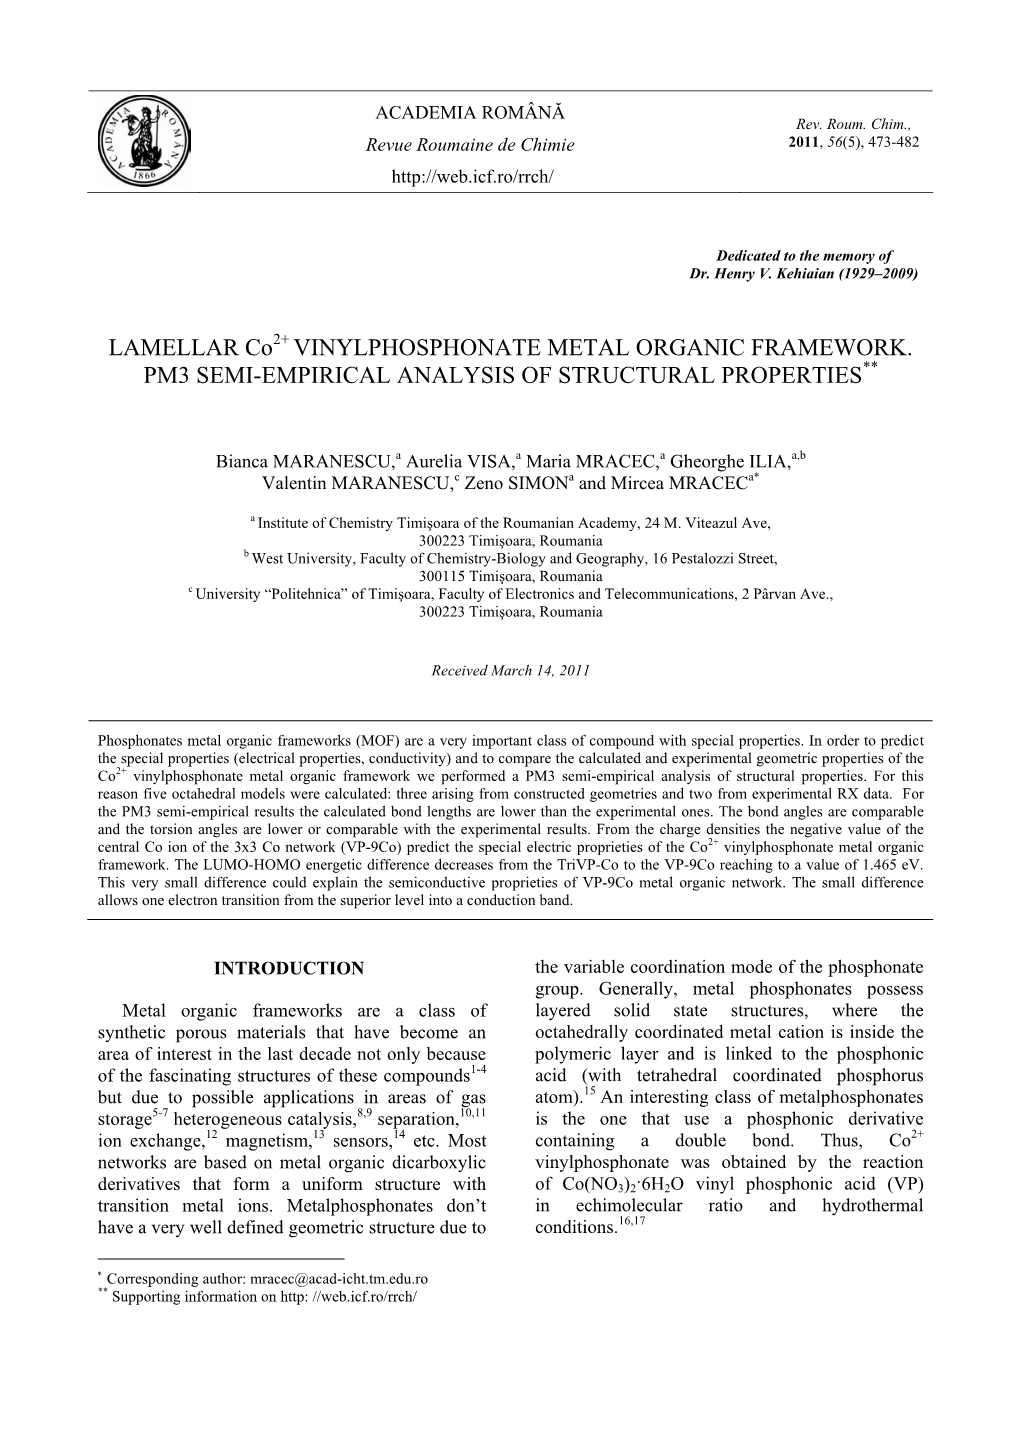 LAMELLAR Co2+ VINYLPHOSPHONATE METAL ORGANIC FRAMEWORK